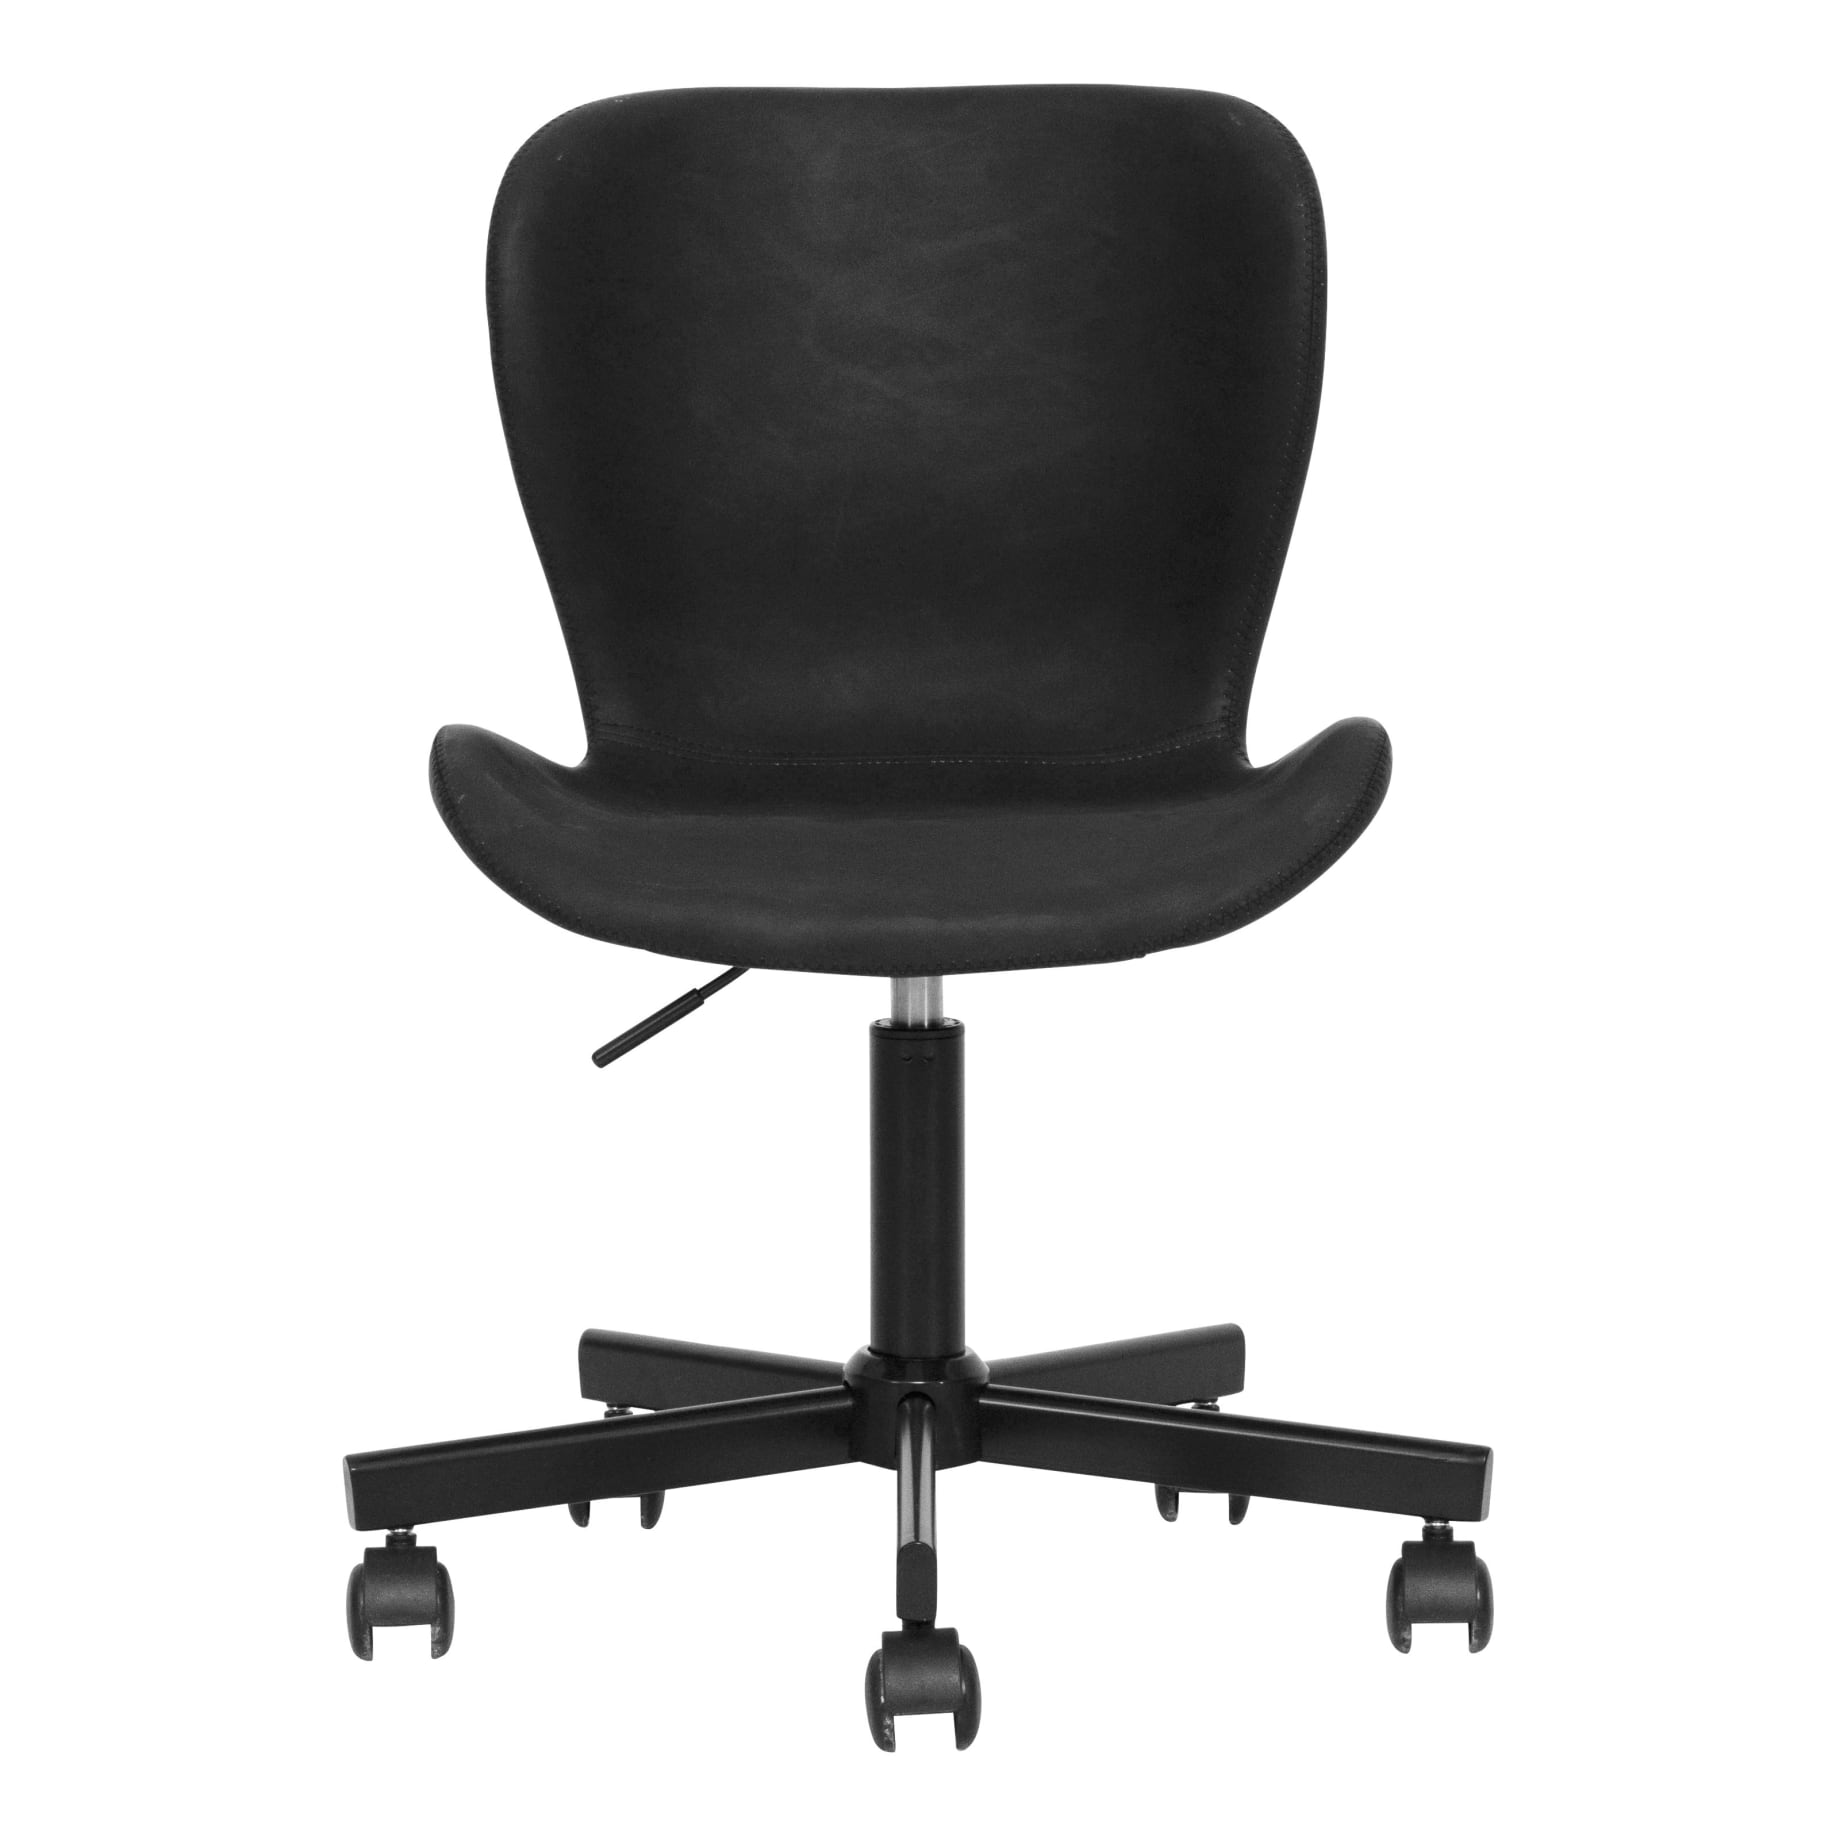 Batilda Desk Chair in Black PU / Black Rollers